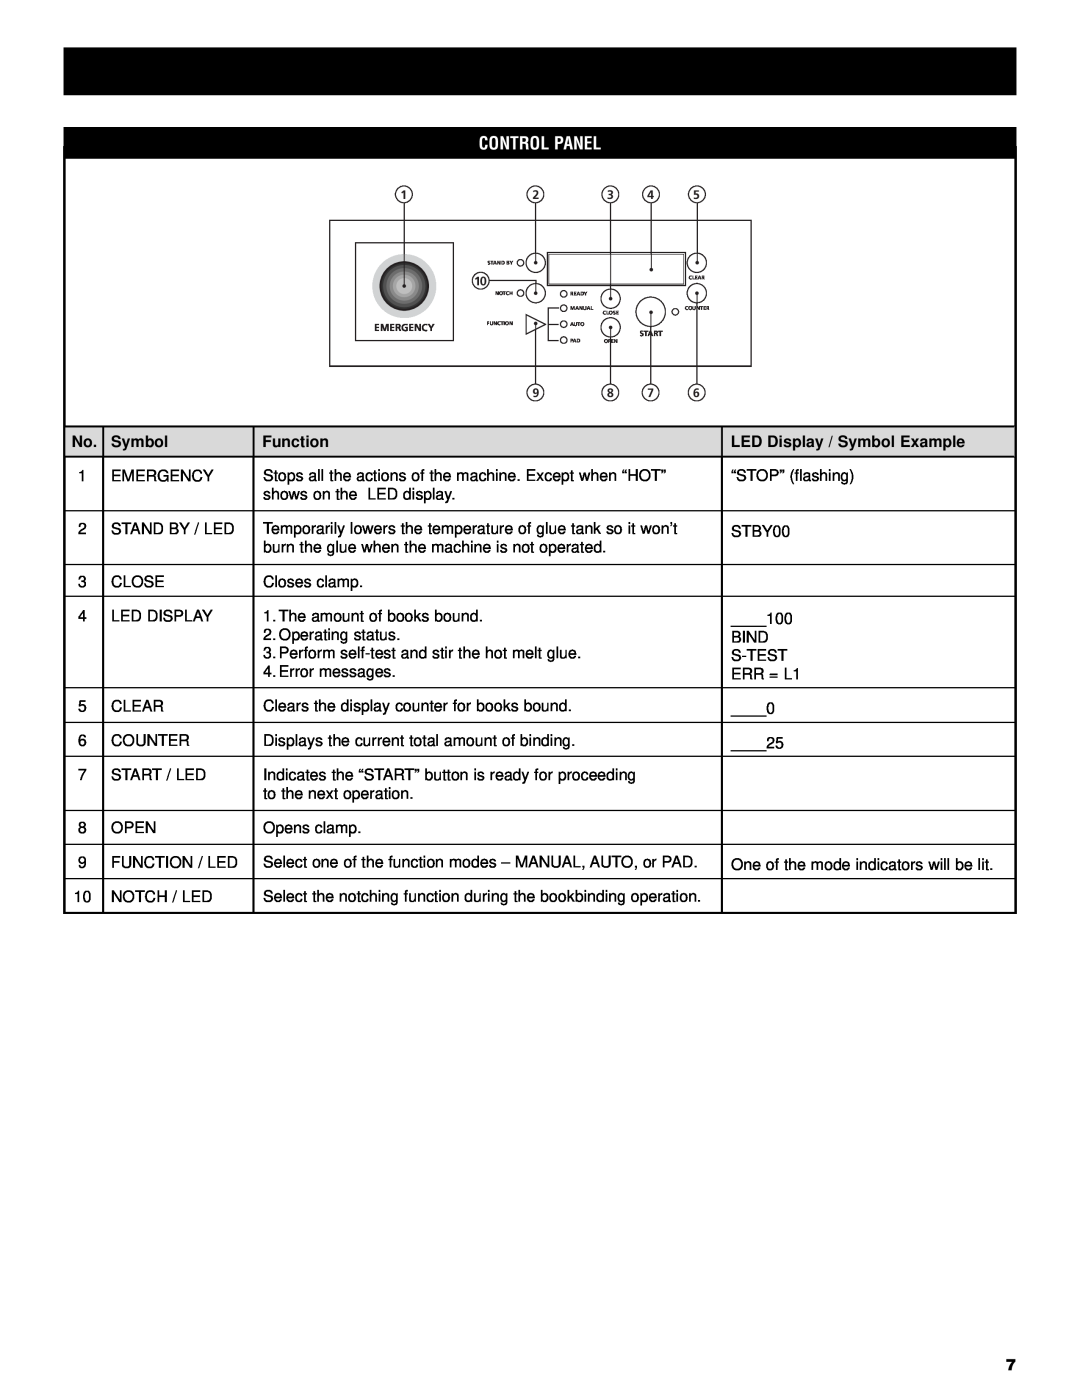 GBC PF3200 operation manual Control Panel, Function, LED Display / Symbol Example 